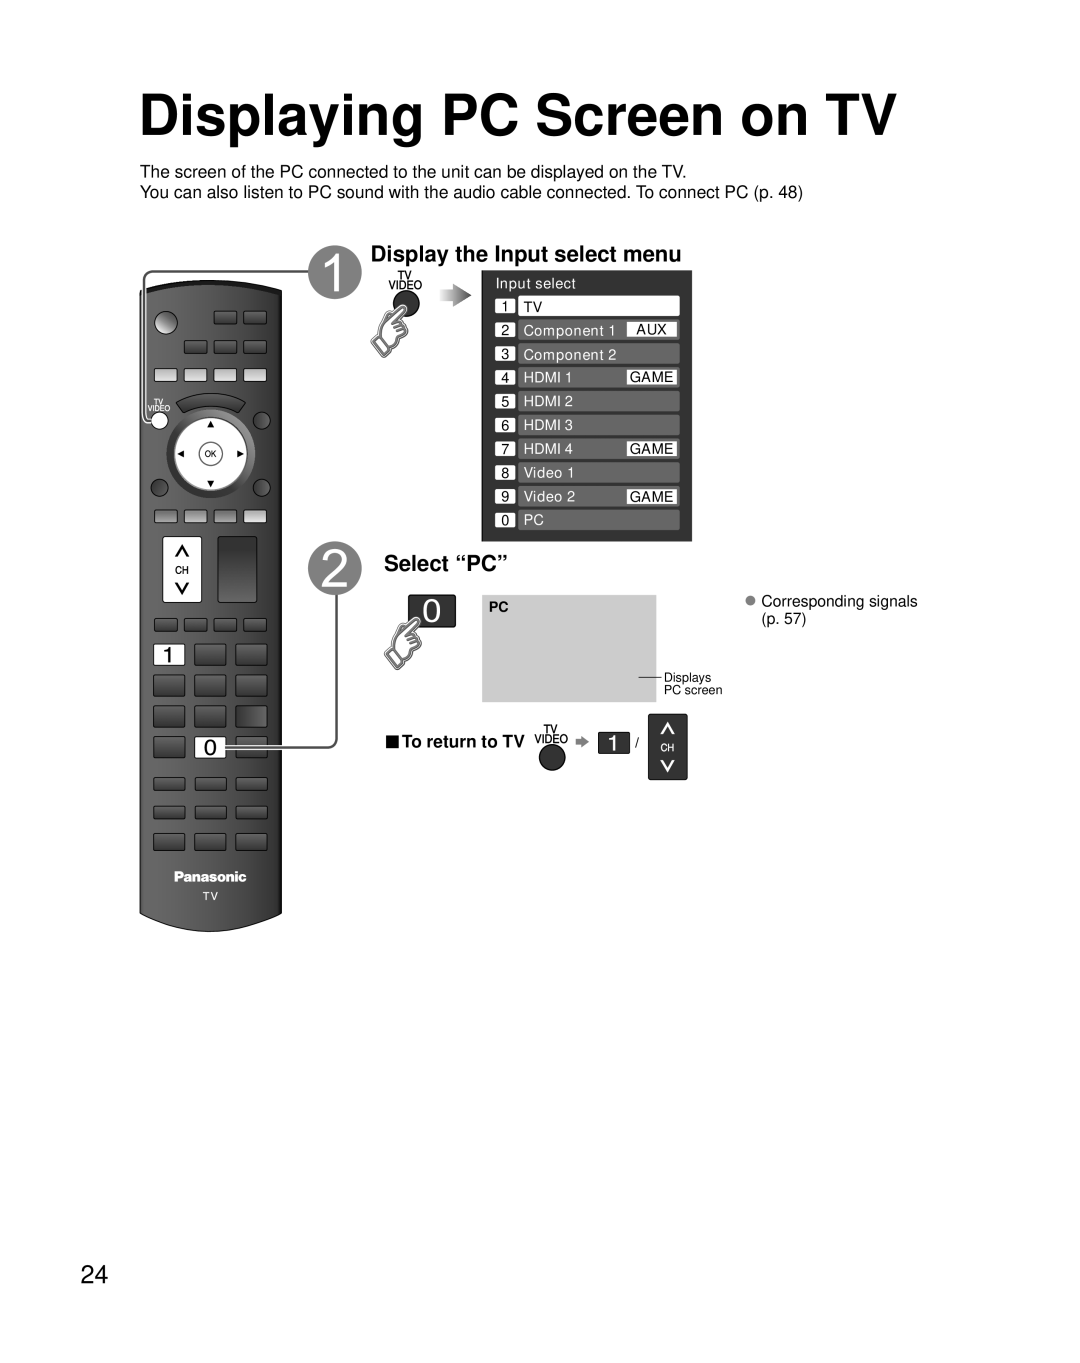 Panasonic TH 65PZ850U Displaying PC Screen on TV, Display the Input select menu, Select “PC”, To return to TV, Component 